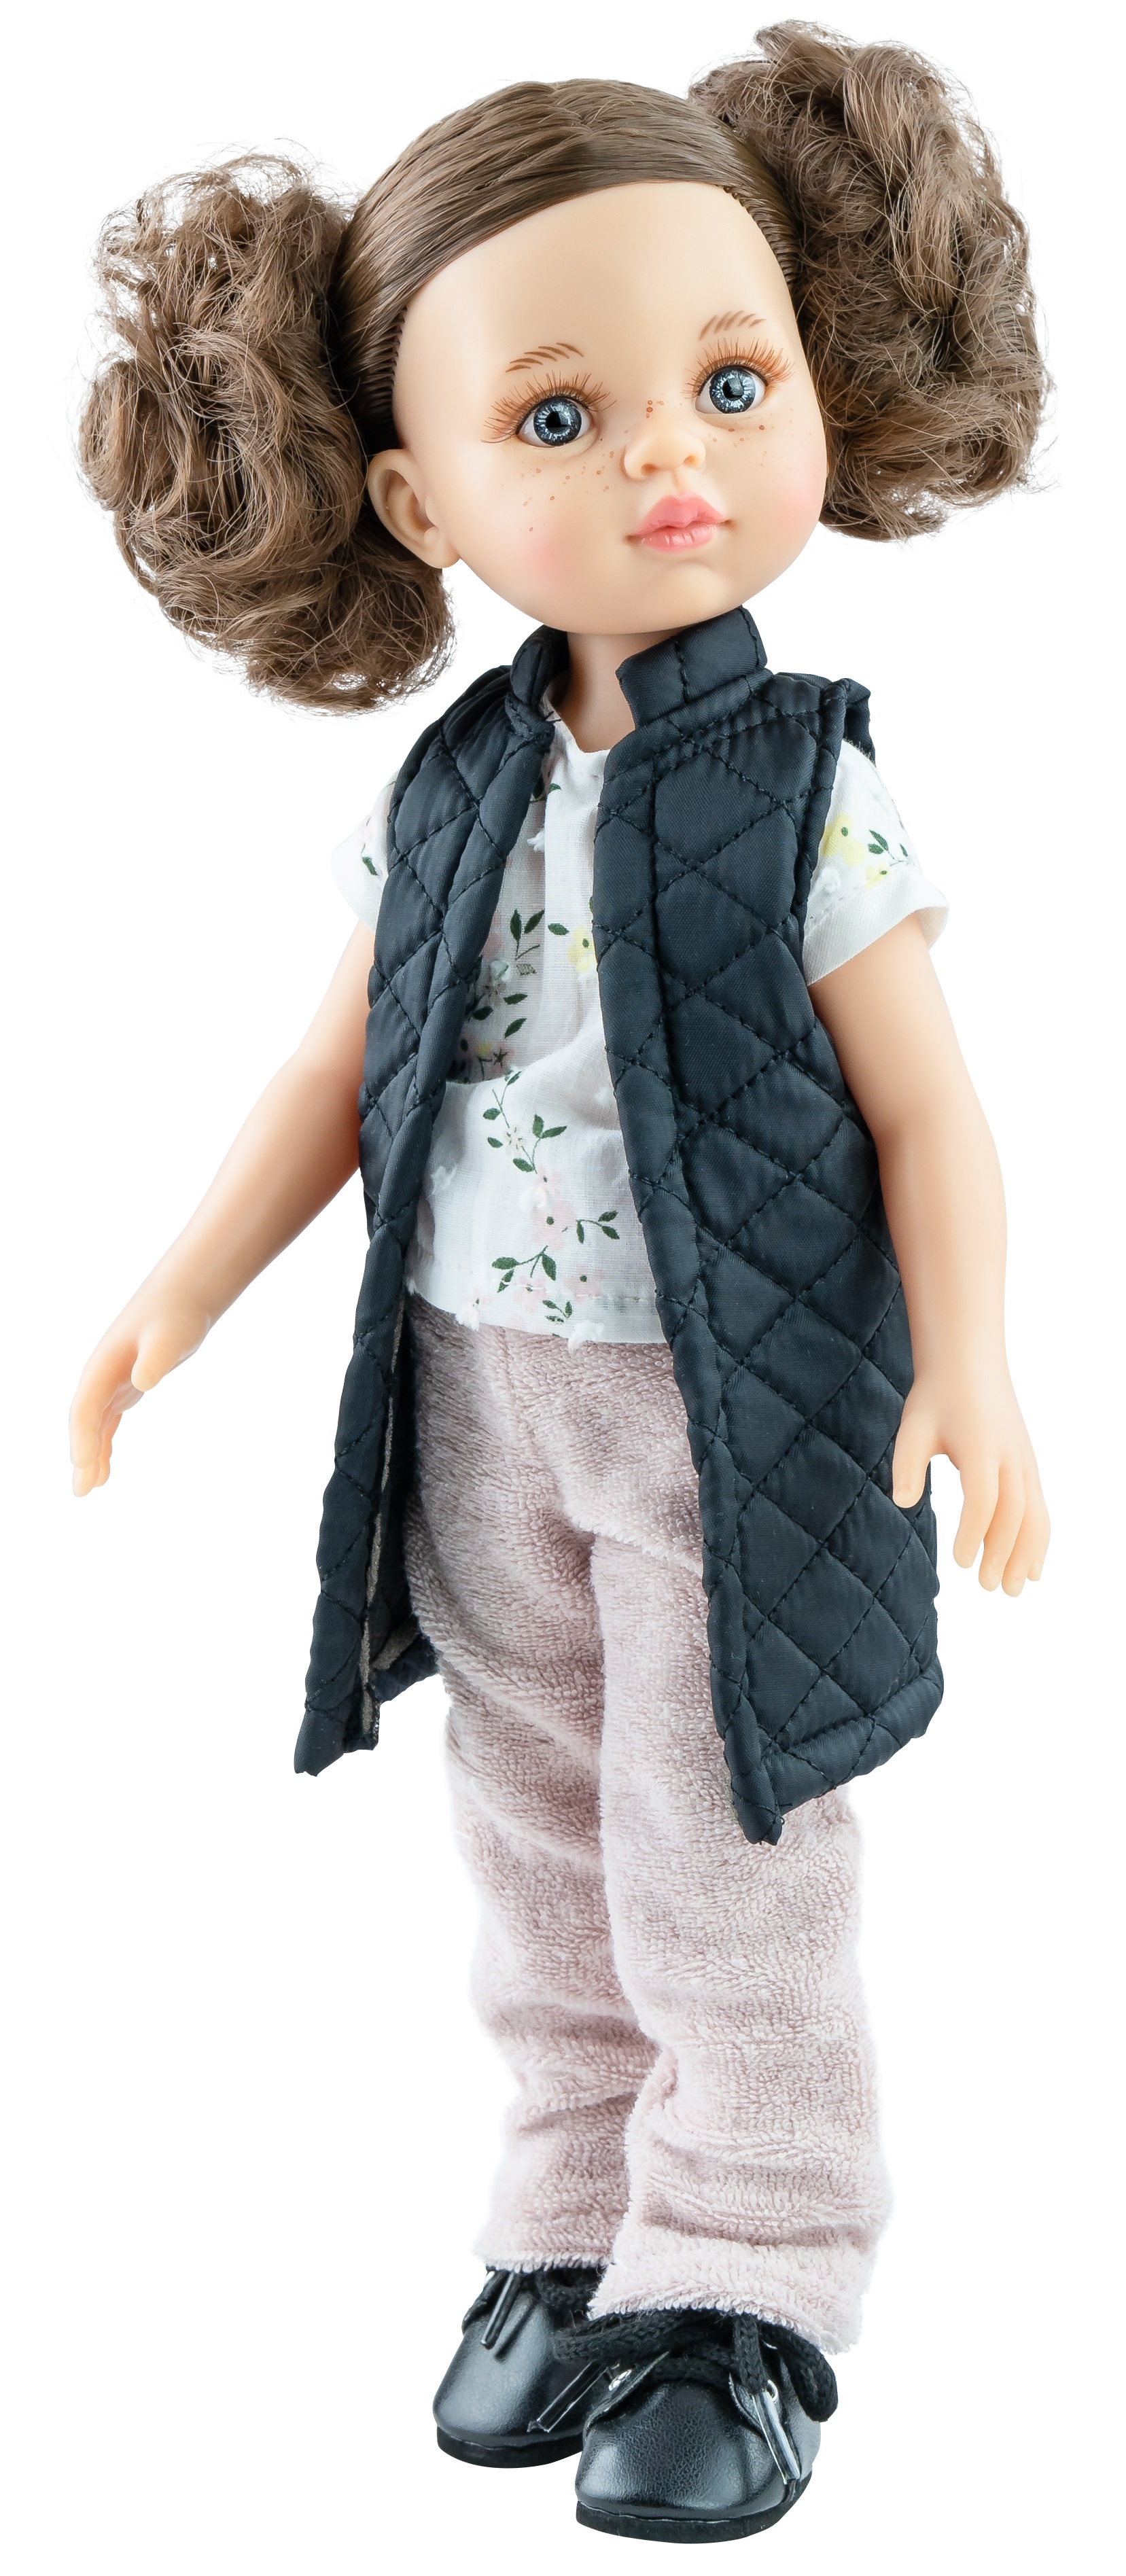 Кукла Paola Reina Amigas - Карол, с черна грейка и пухкав панталон, 32 cm (4465)